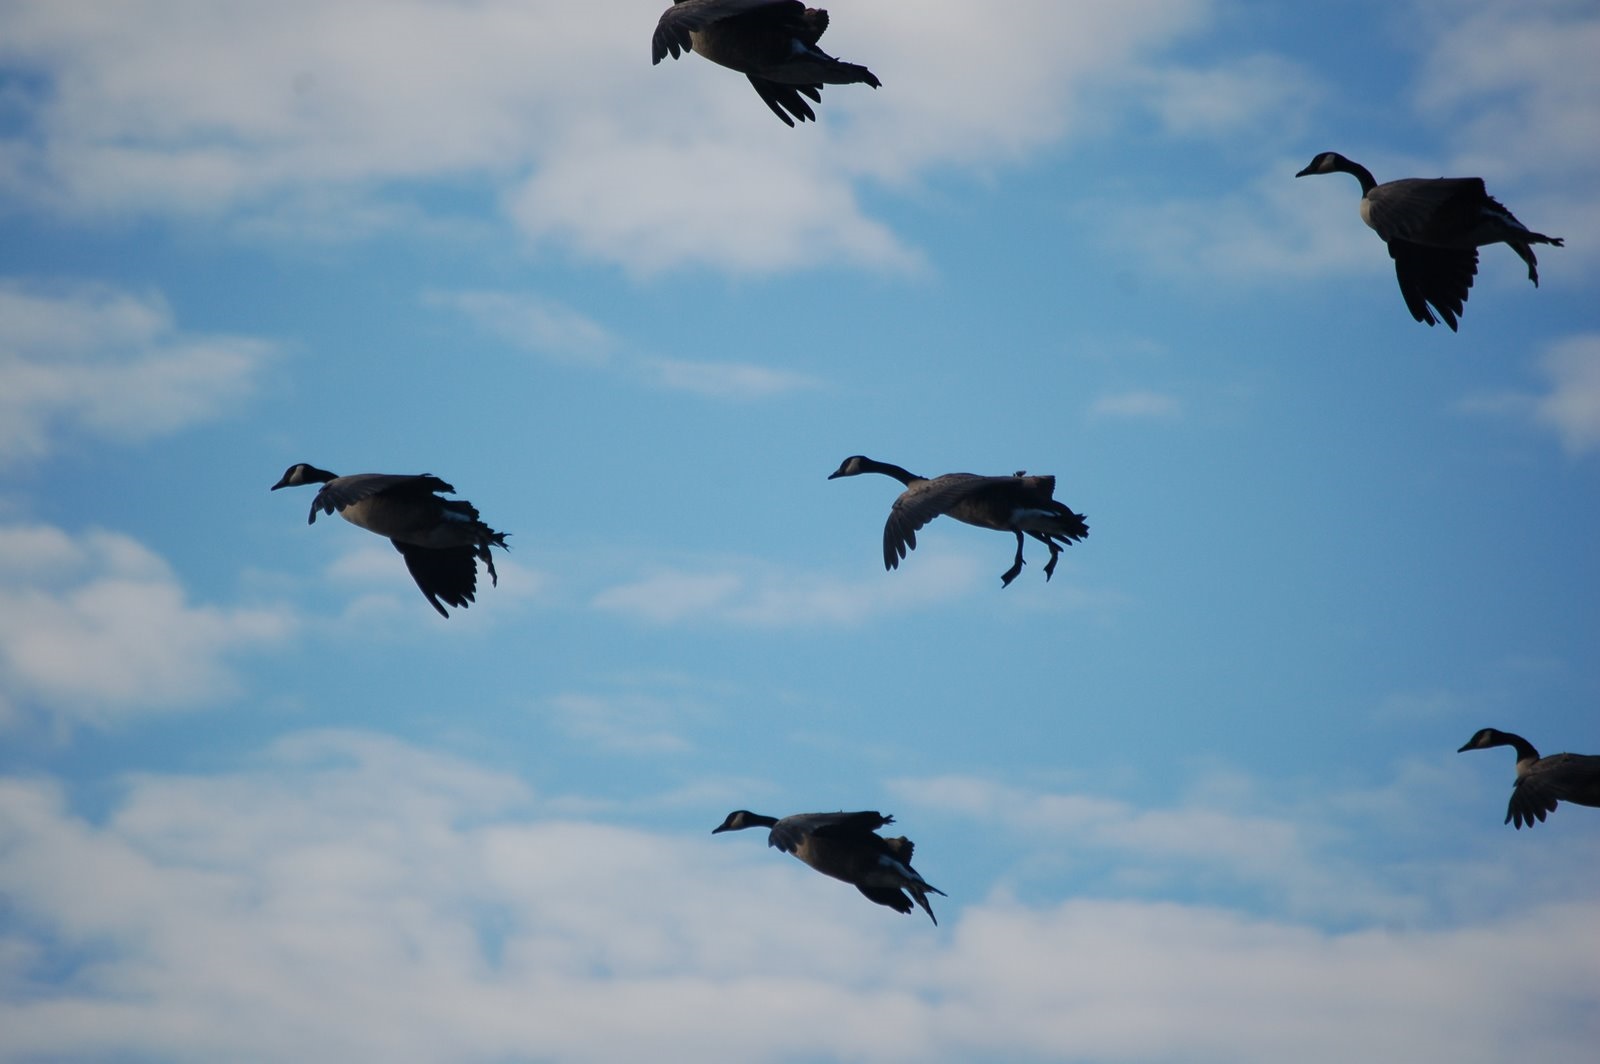 colorado goose hunting tips. Birds and Bucks outdoors